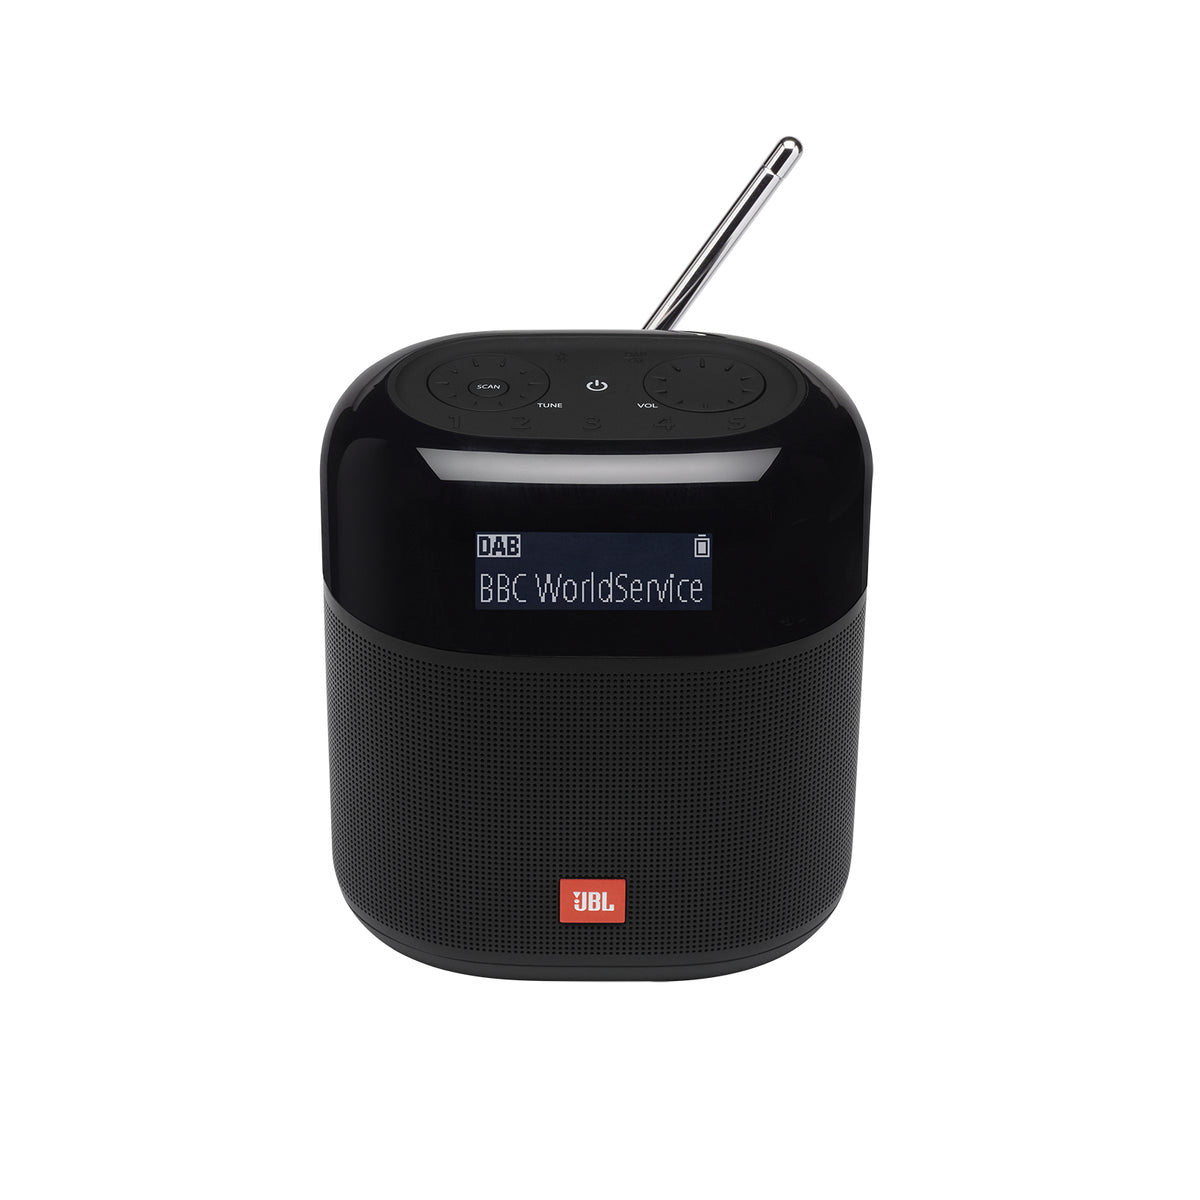 Rádio Portátil JBL Bluetooth DAB/DAB+/FM c/5 botões de memória e LCD, Waterproof - Black (TunnerXL)